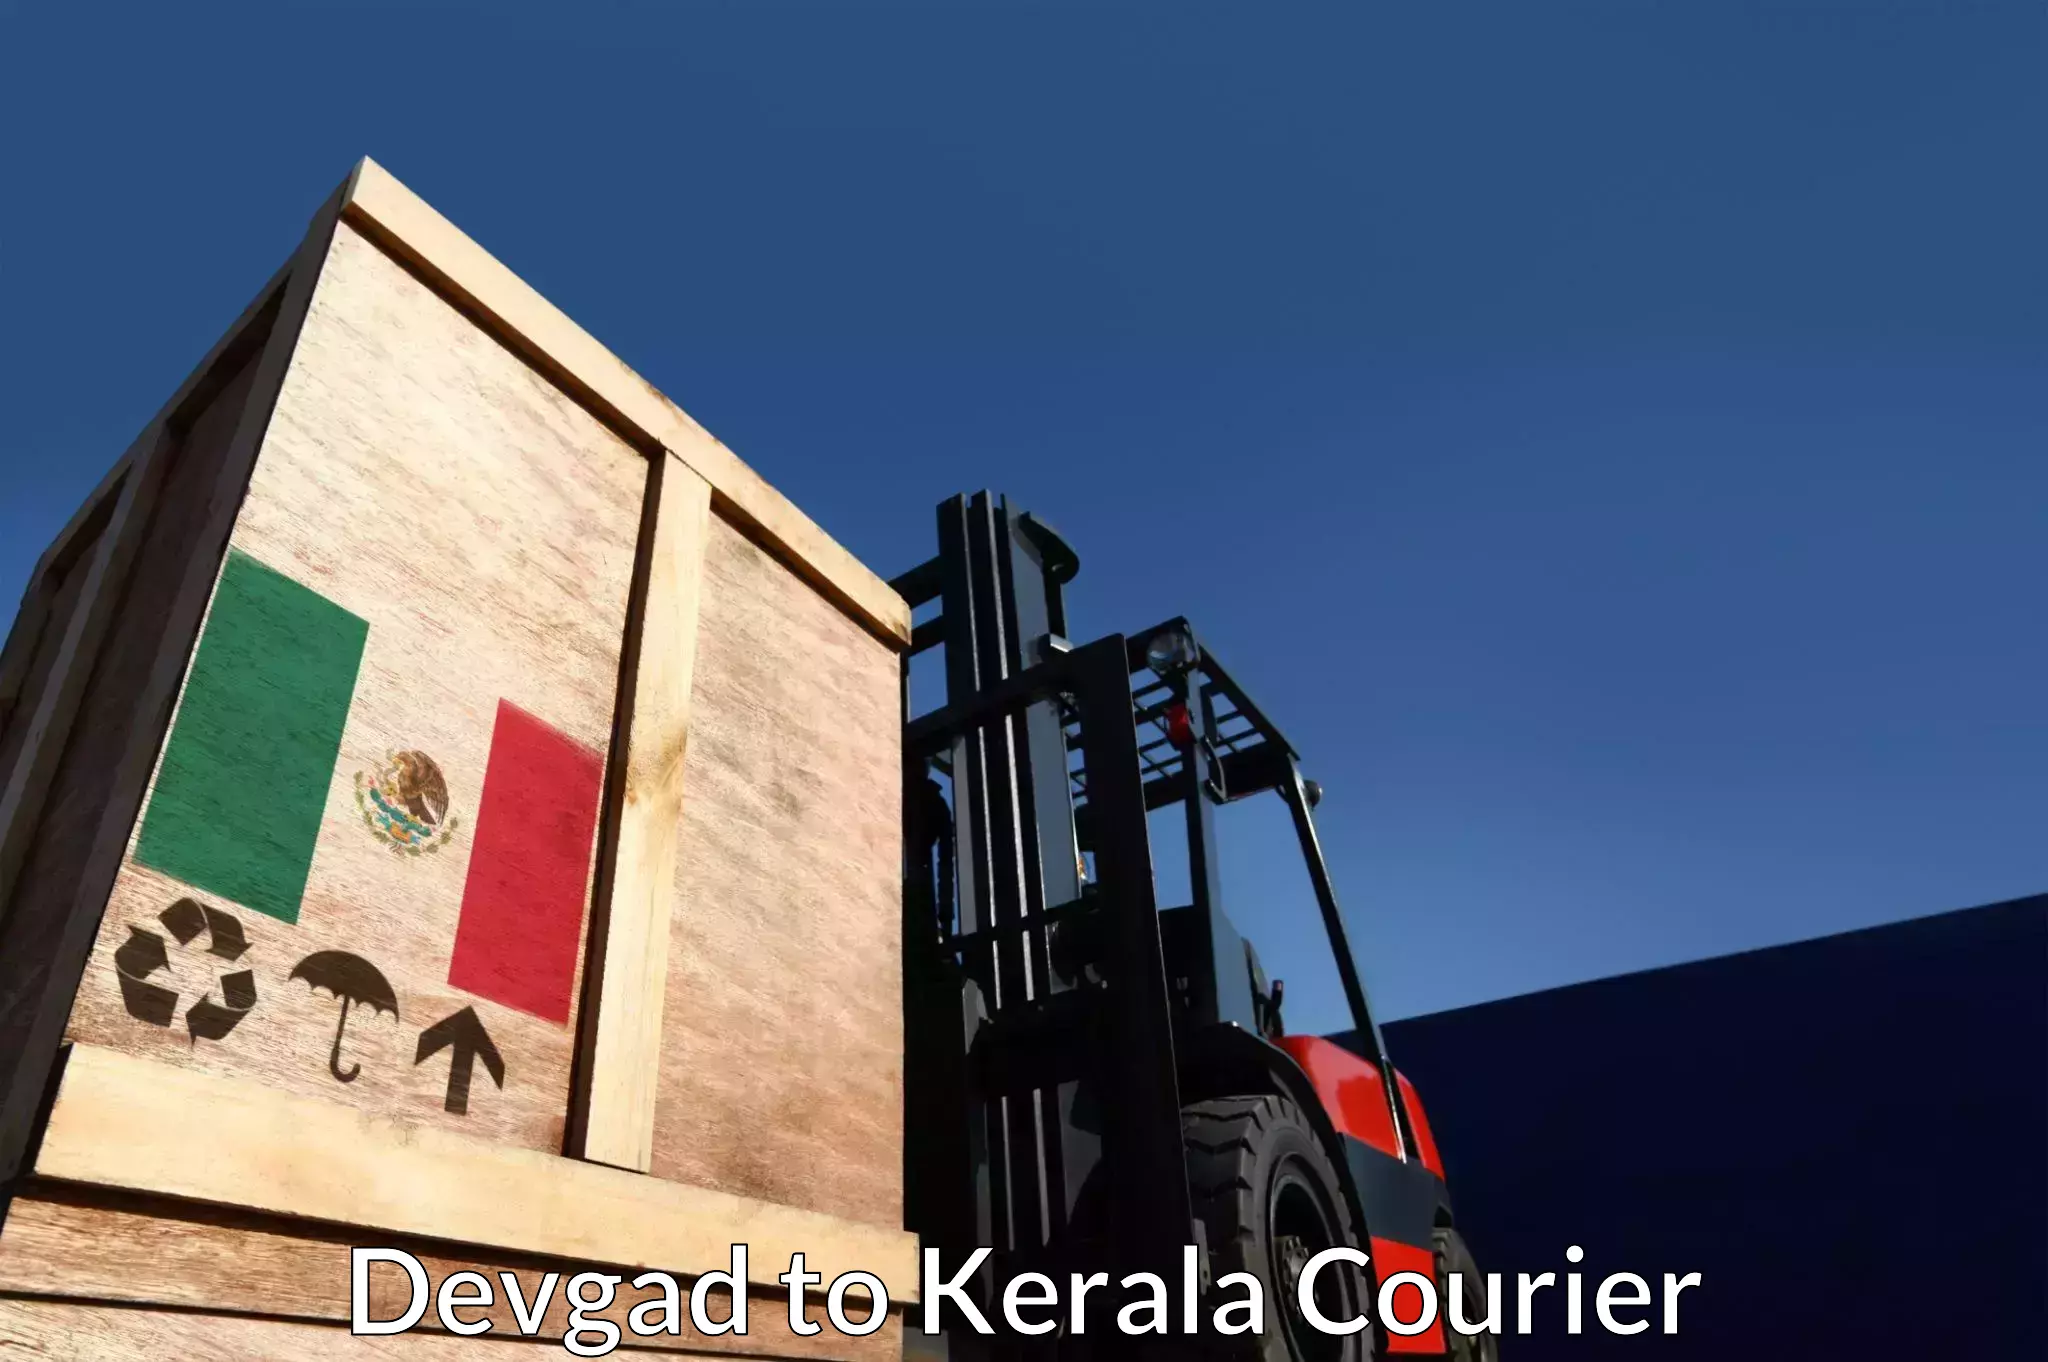 Courier service efficiency Devgad to Cochin Port Kochi